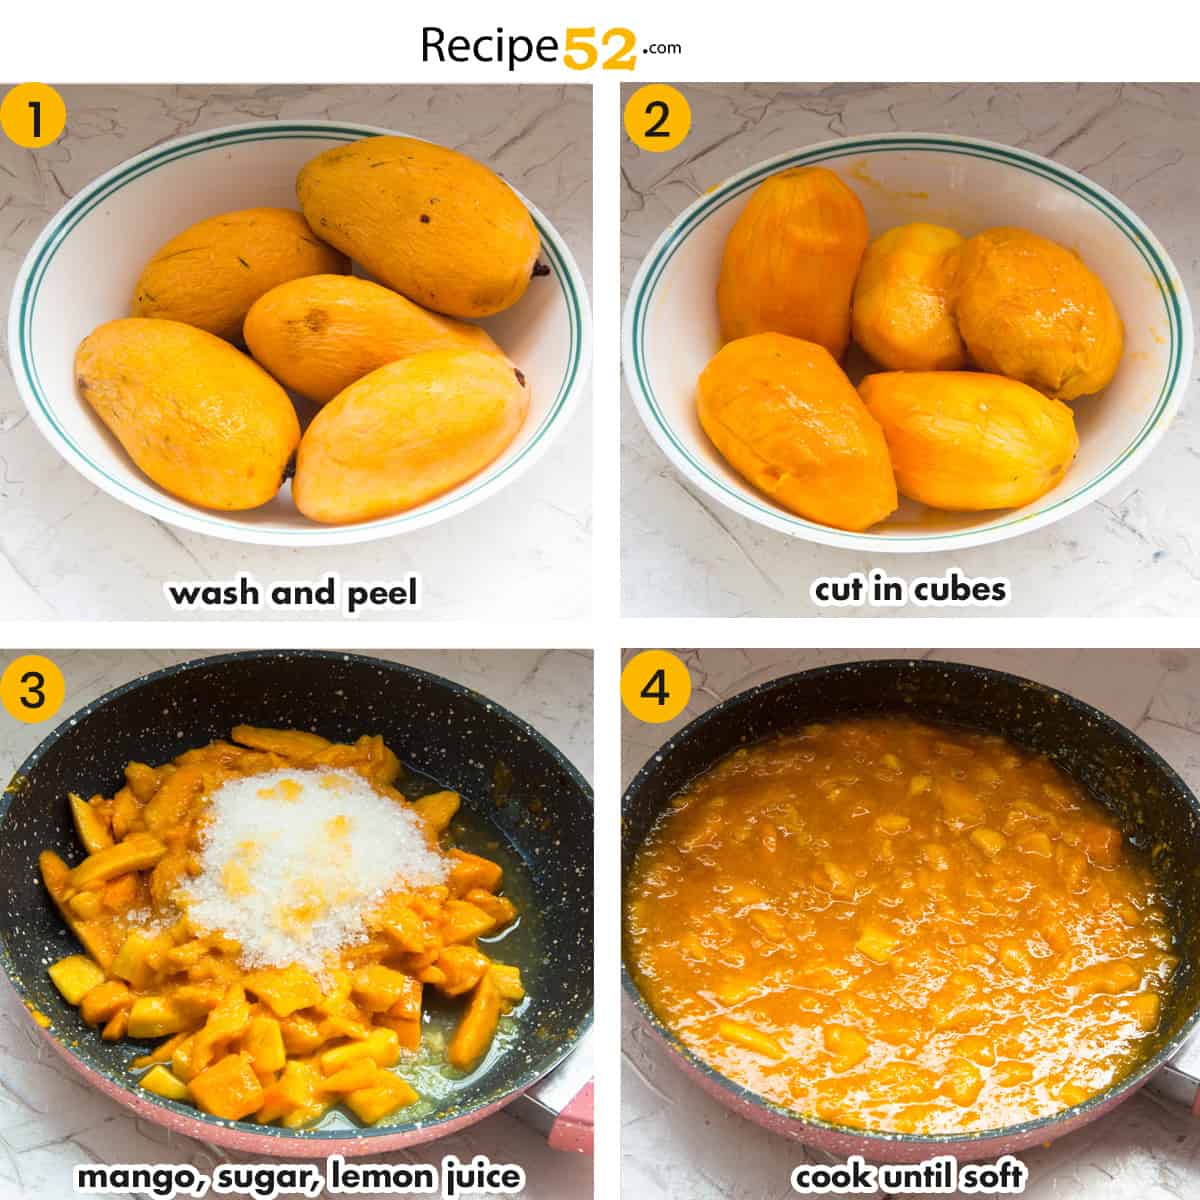 Steps to make mango puree and cook.